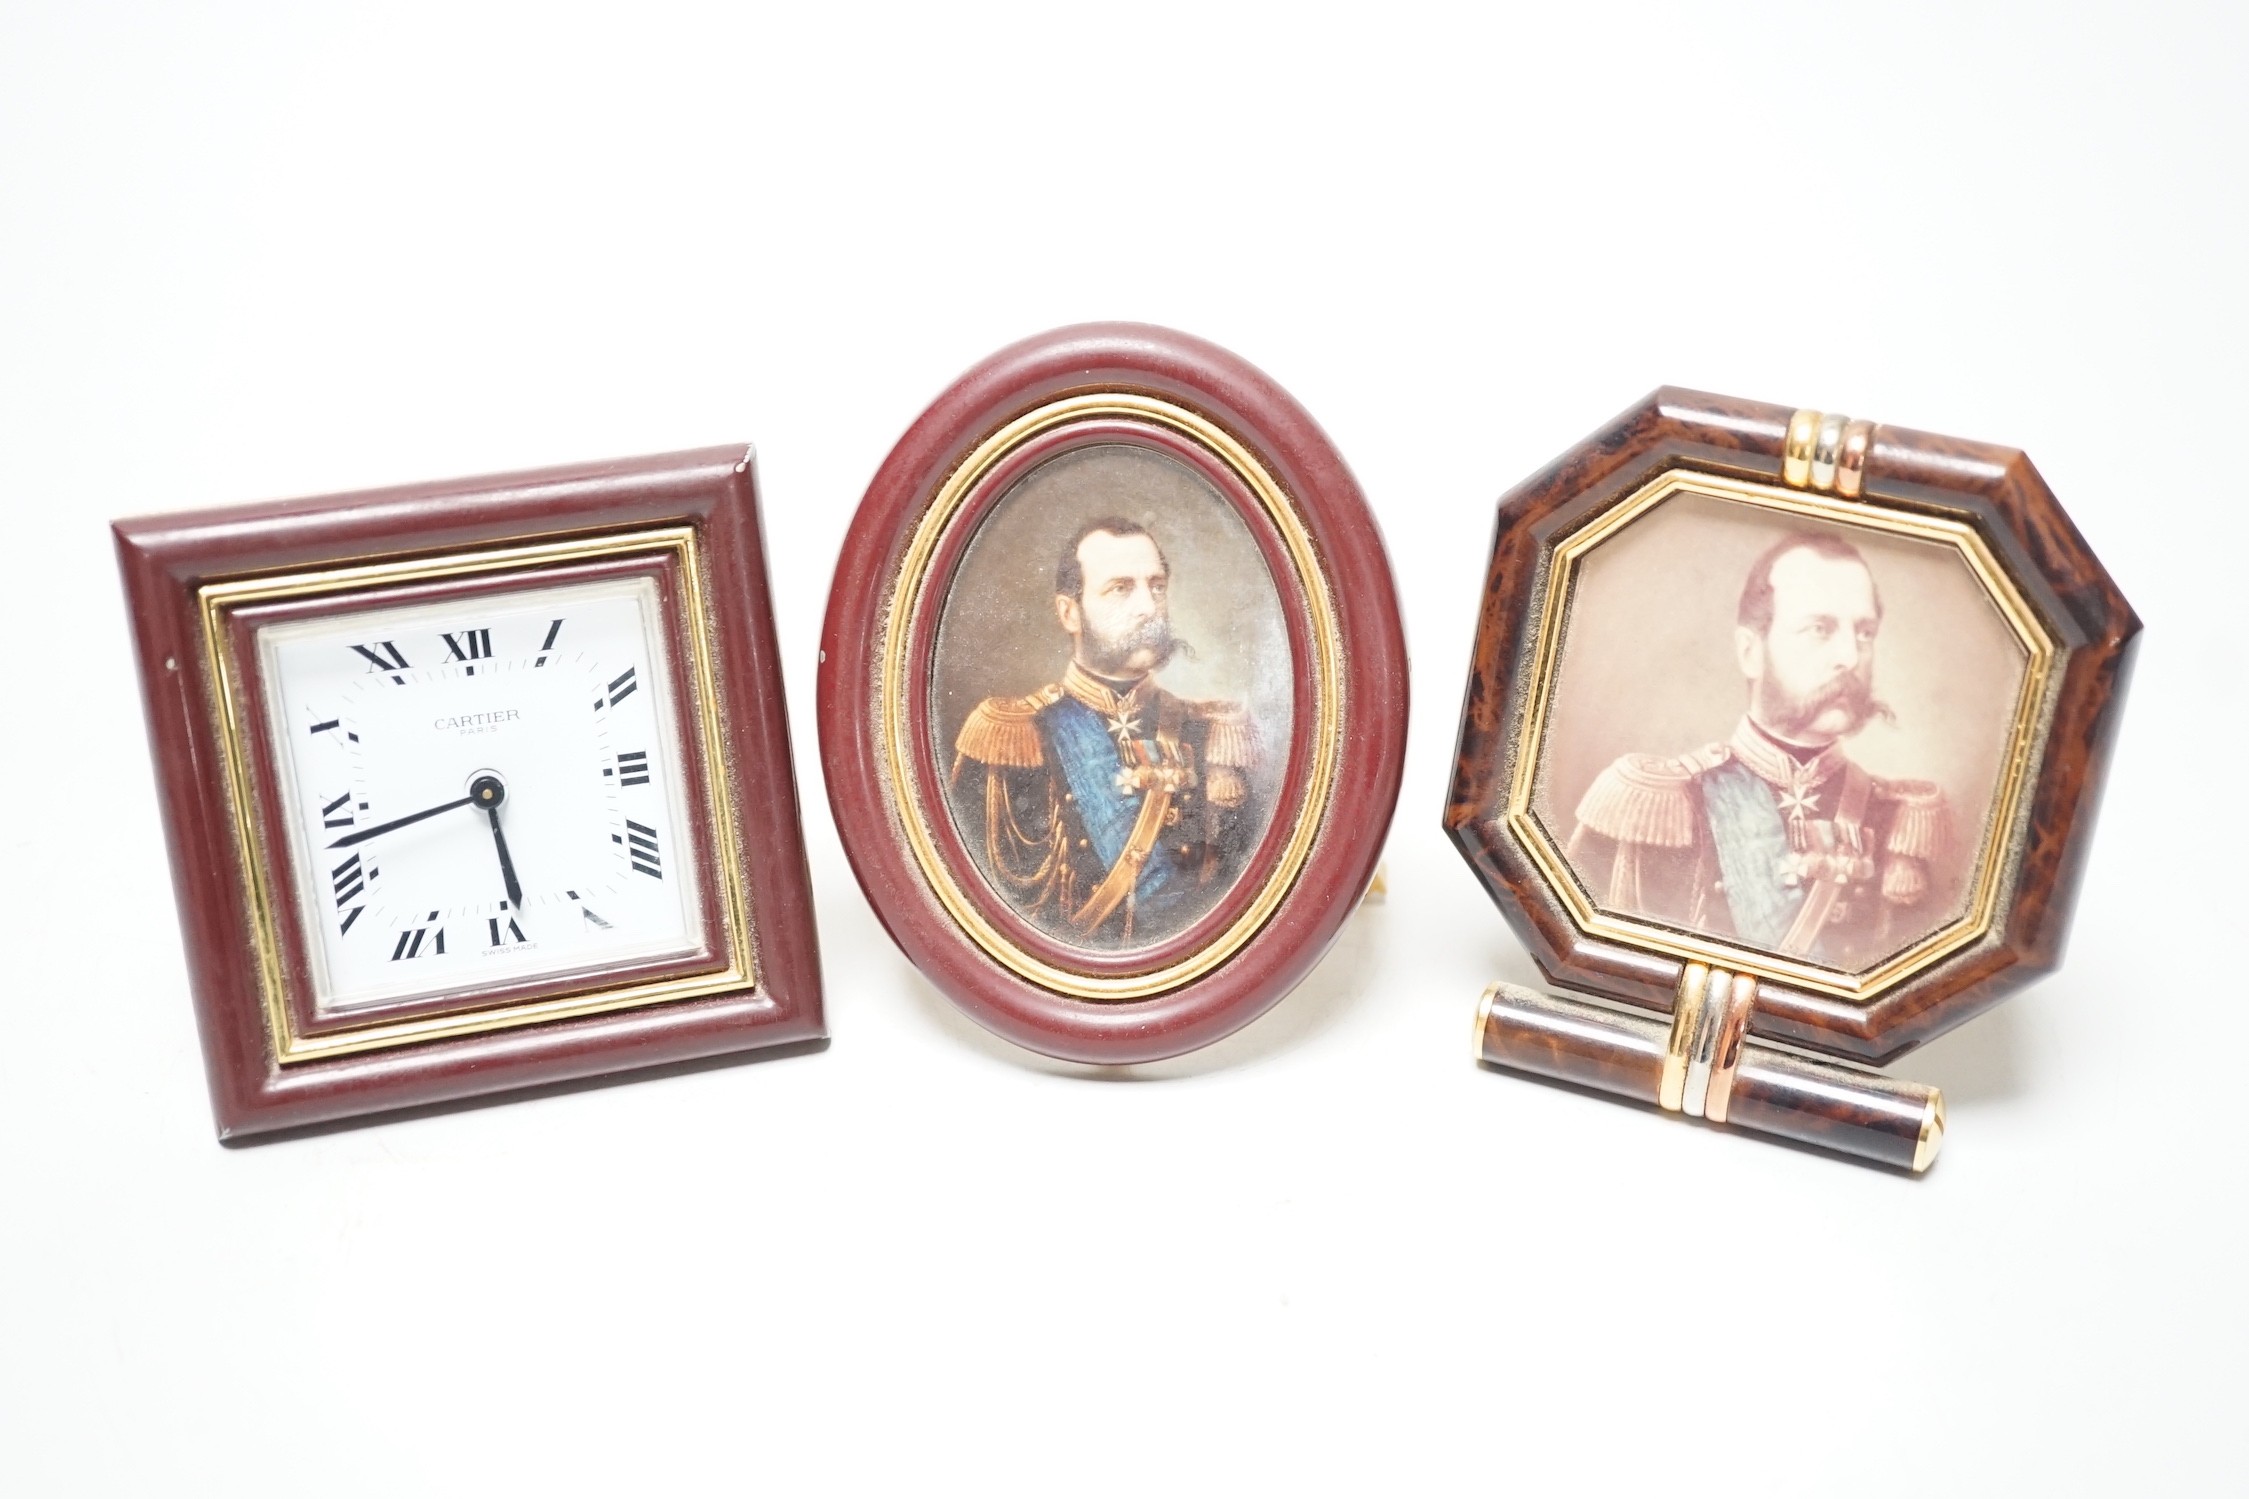 A Cartier travelling alarm timepiece and two Must de Cartier miniature frames